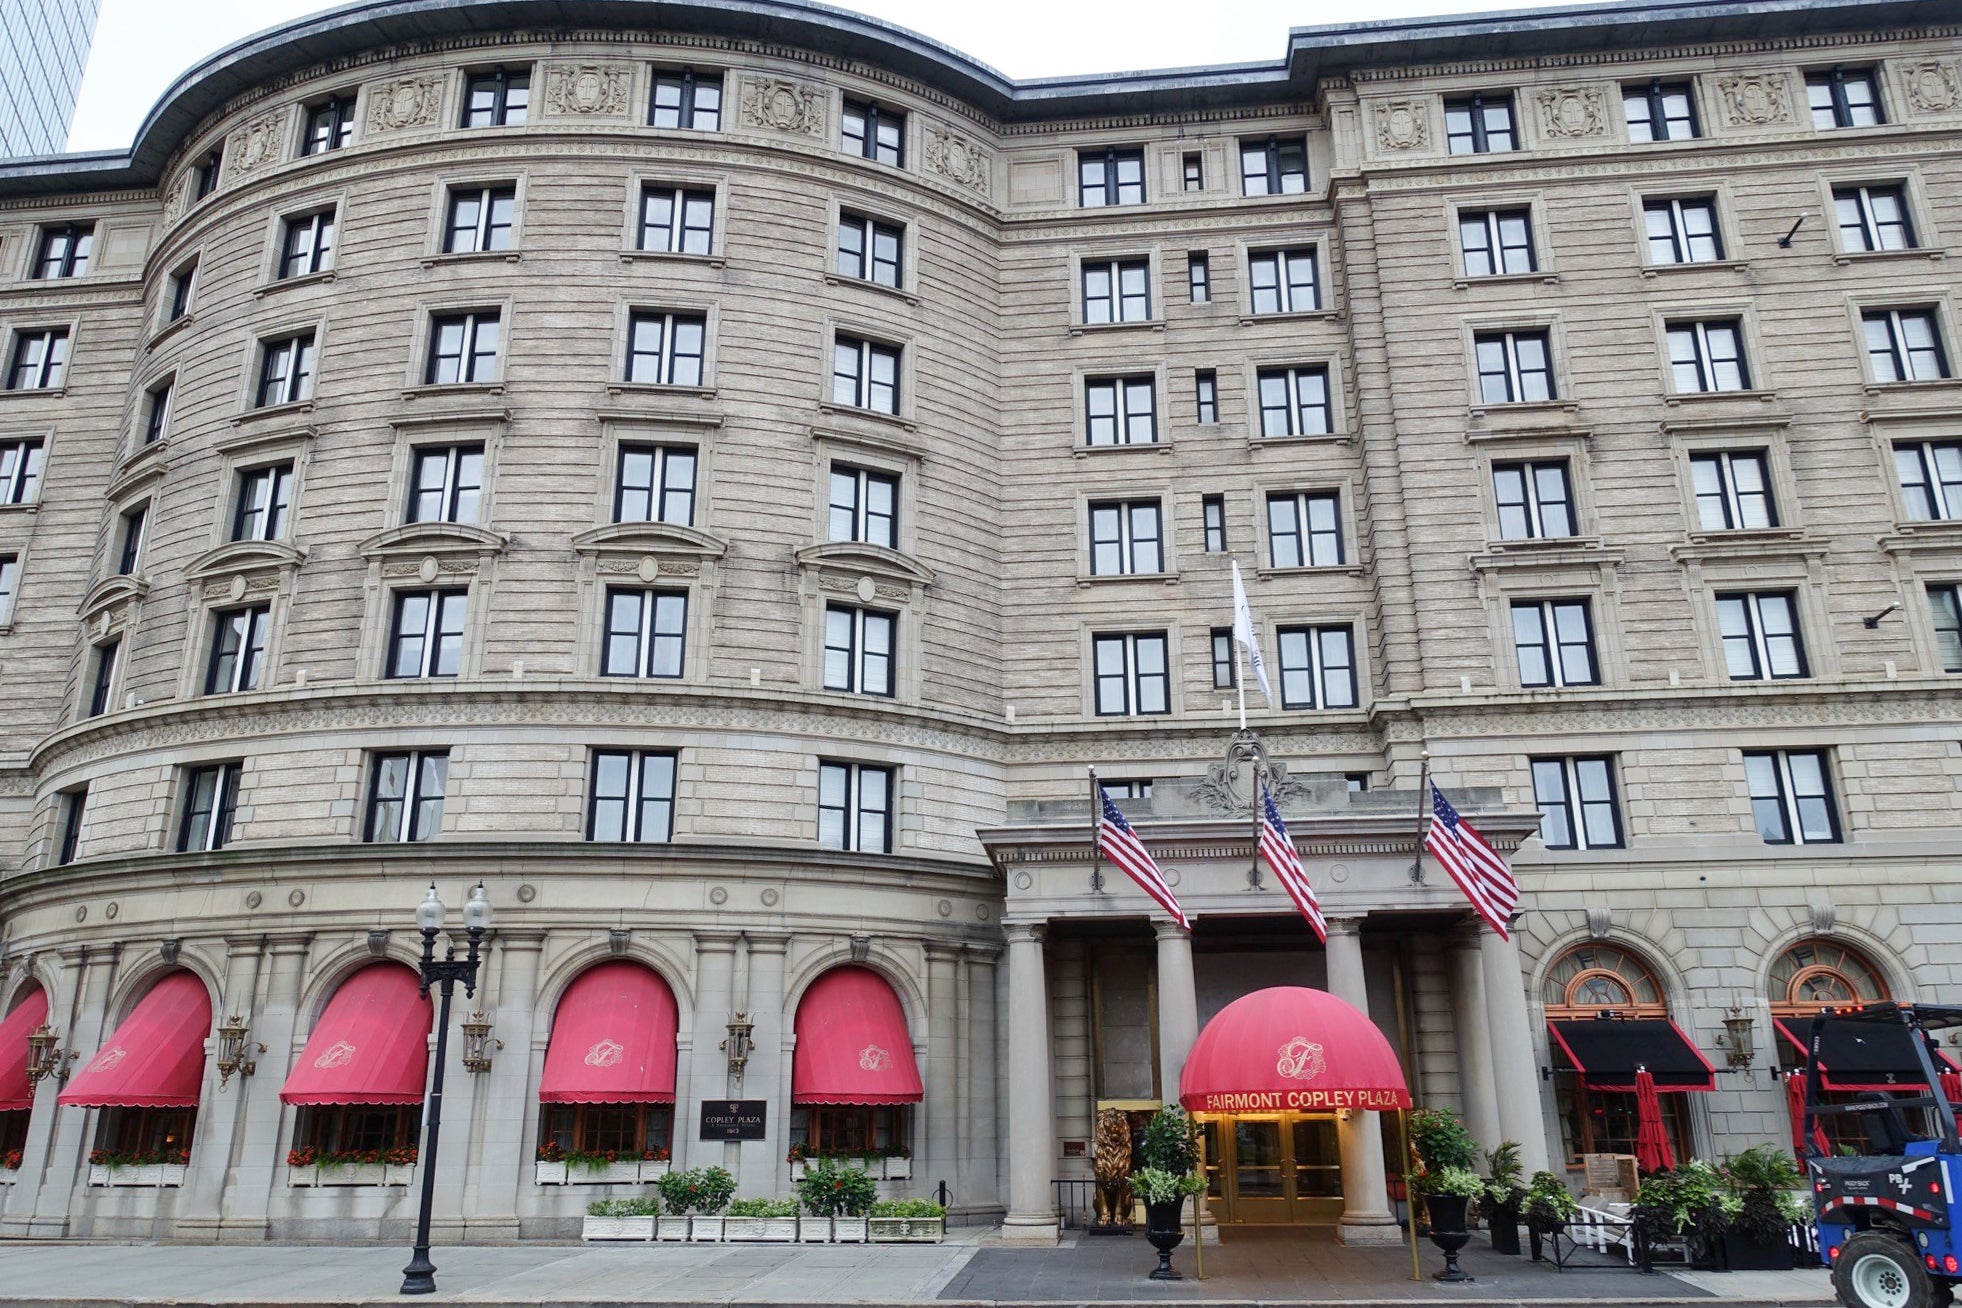 Fairmont Copley Plaza, 138 Saint James Avenue Boston MA, A Luxurious Hotel  Located in Copley Square